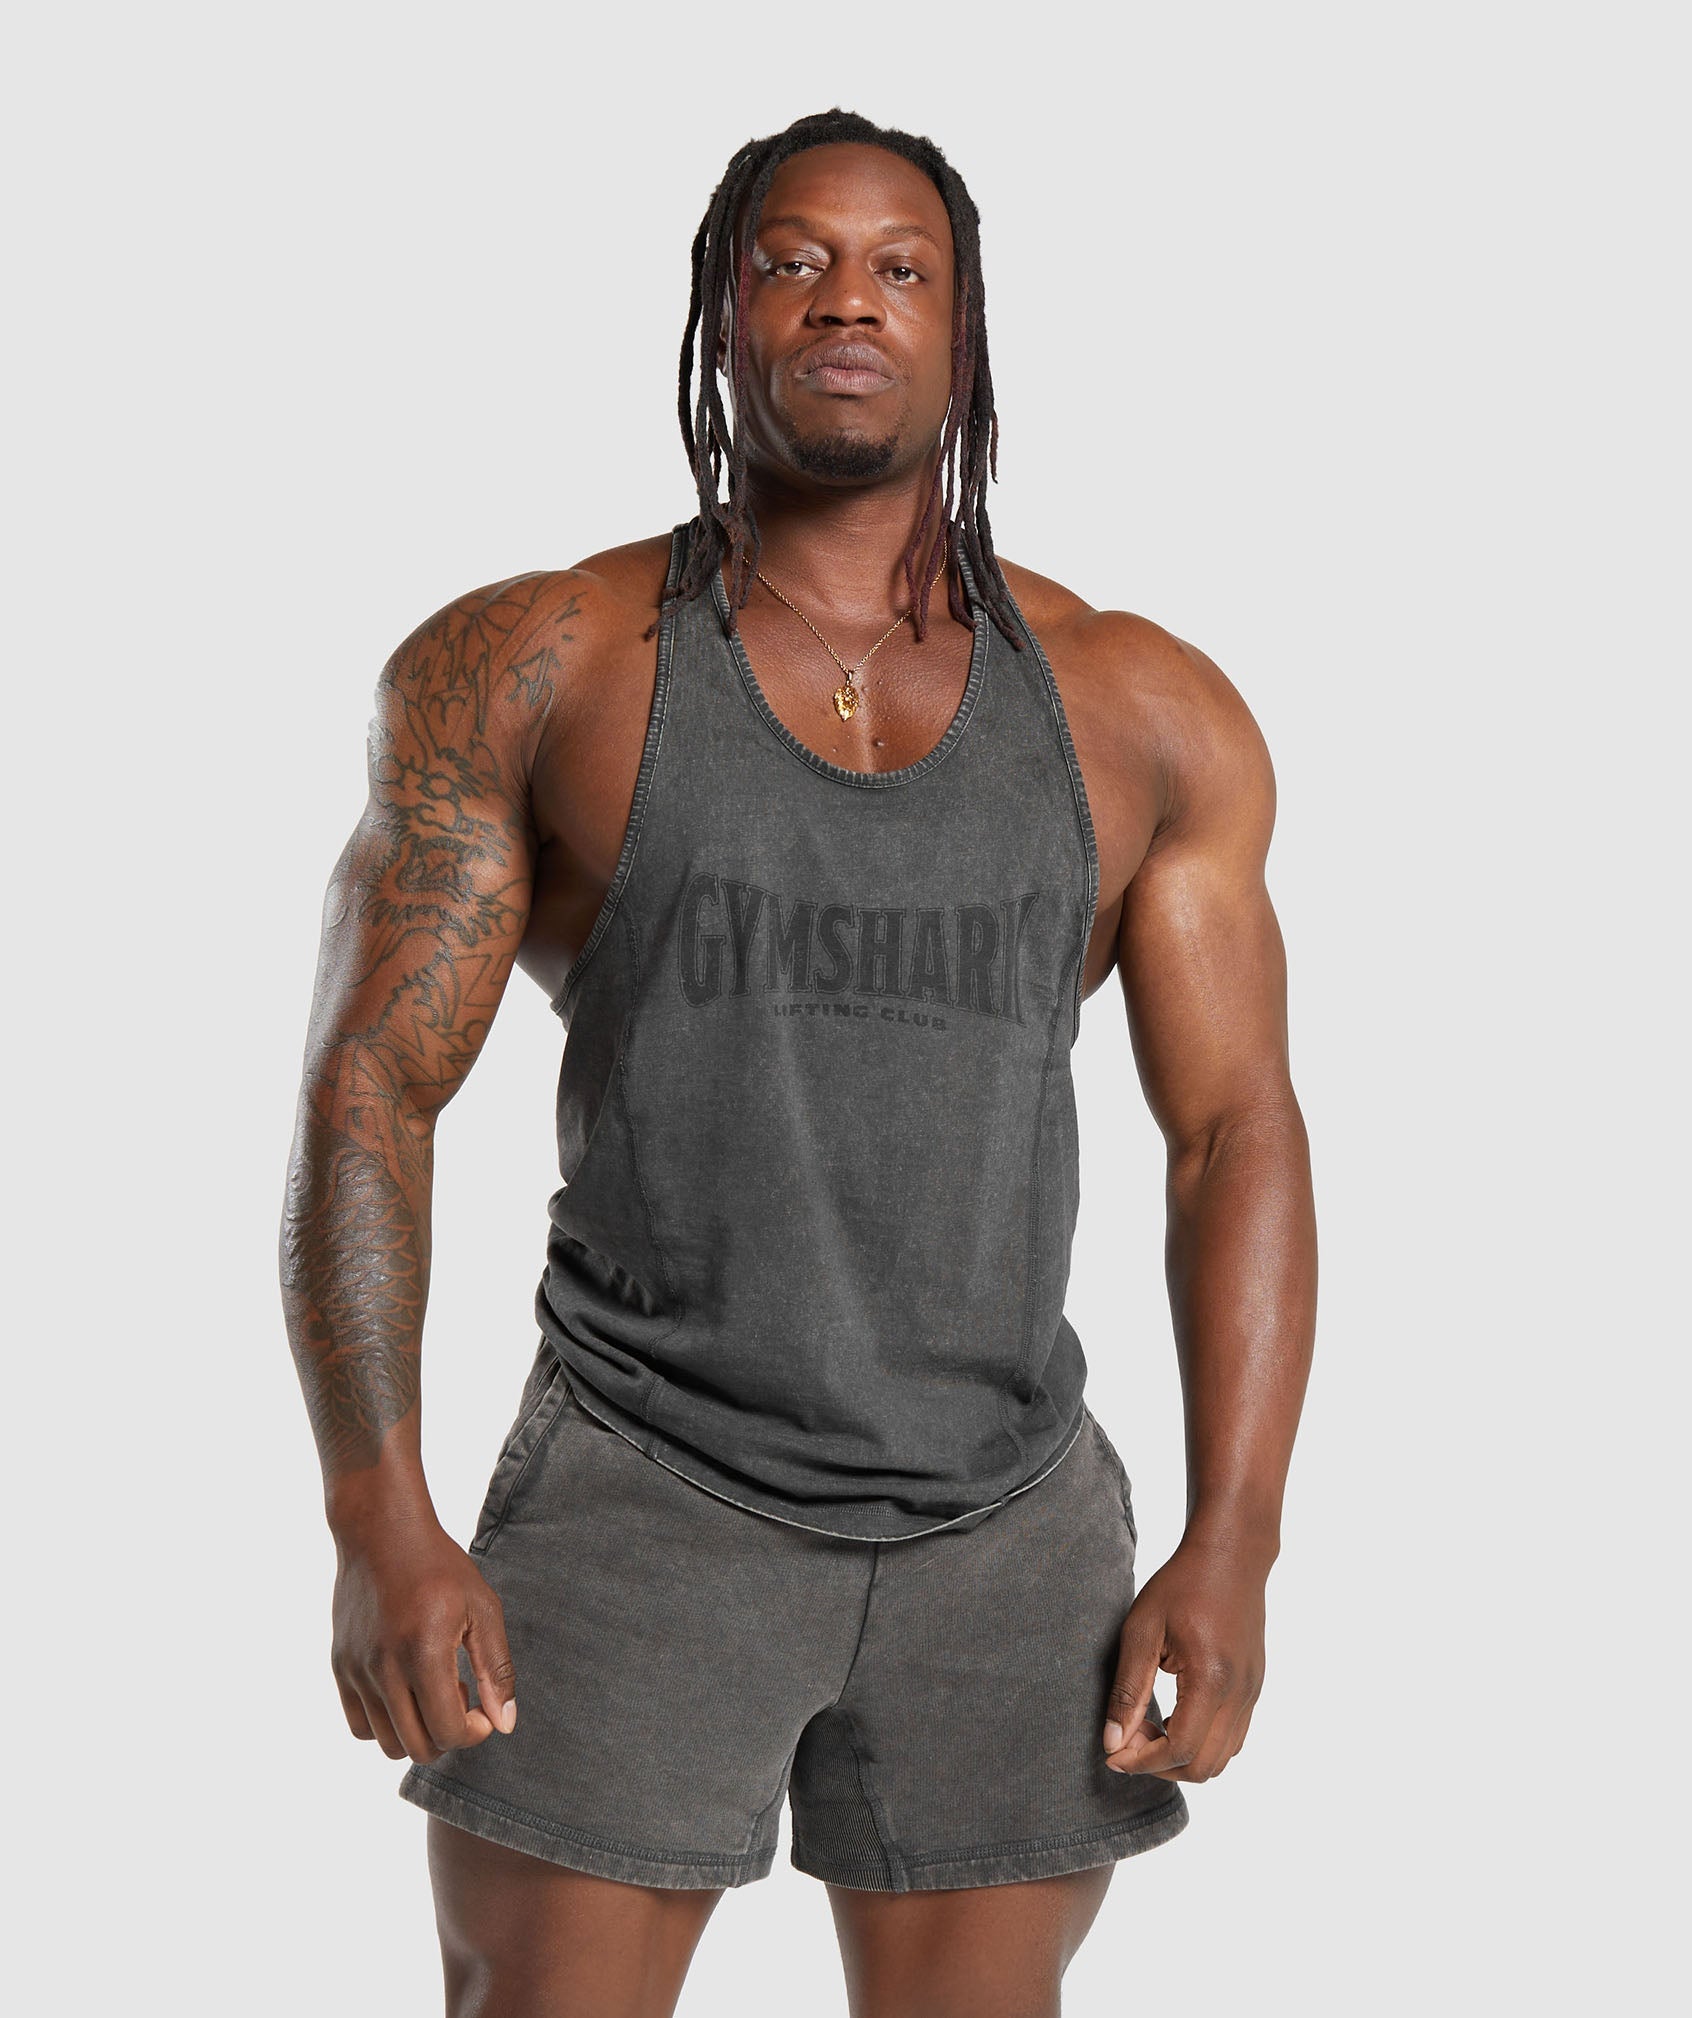 Men's Bodybuilding Clothes & Gym Wear